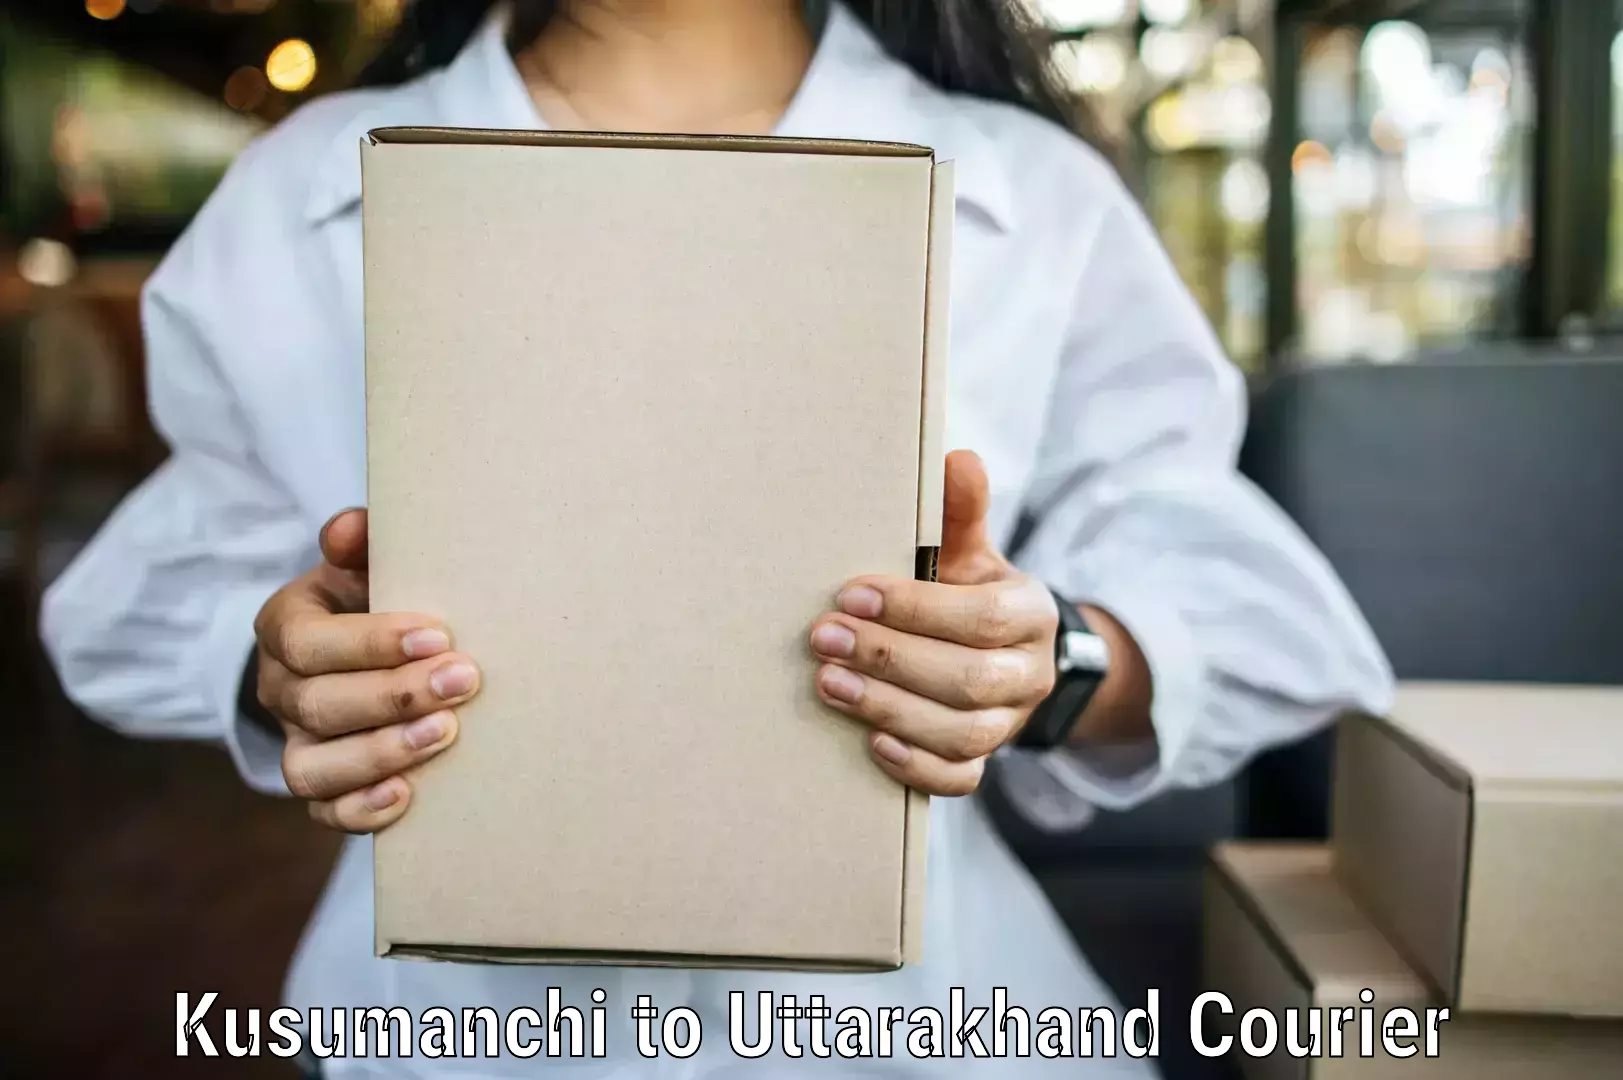 Full-service courier options Kusumanchi to Rishikesh